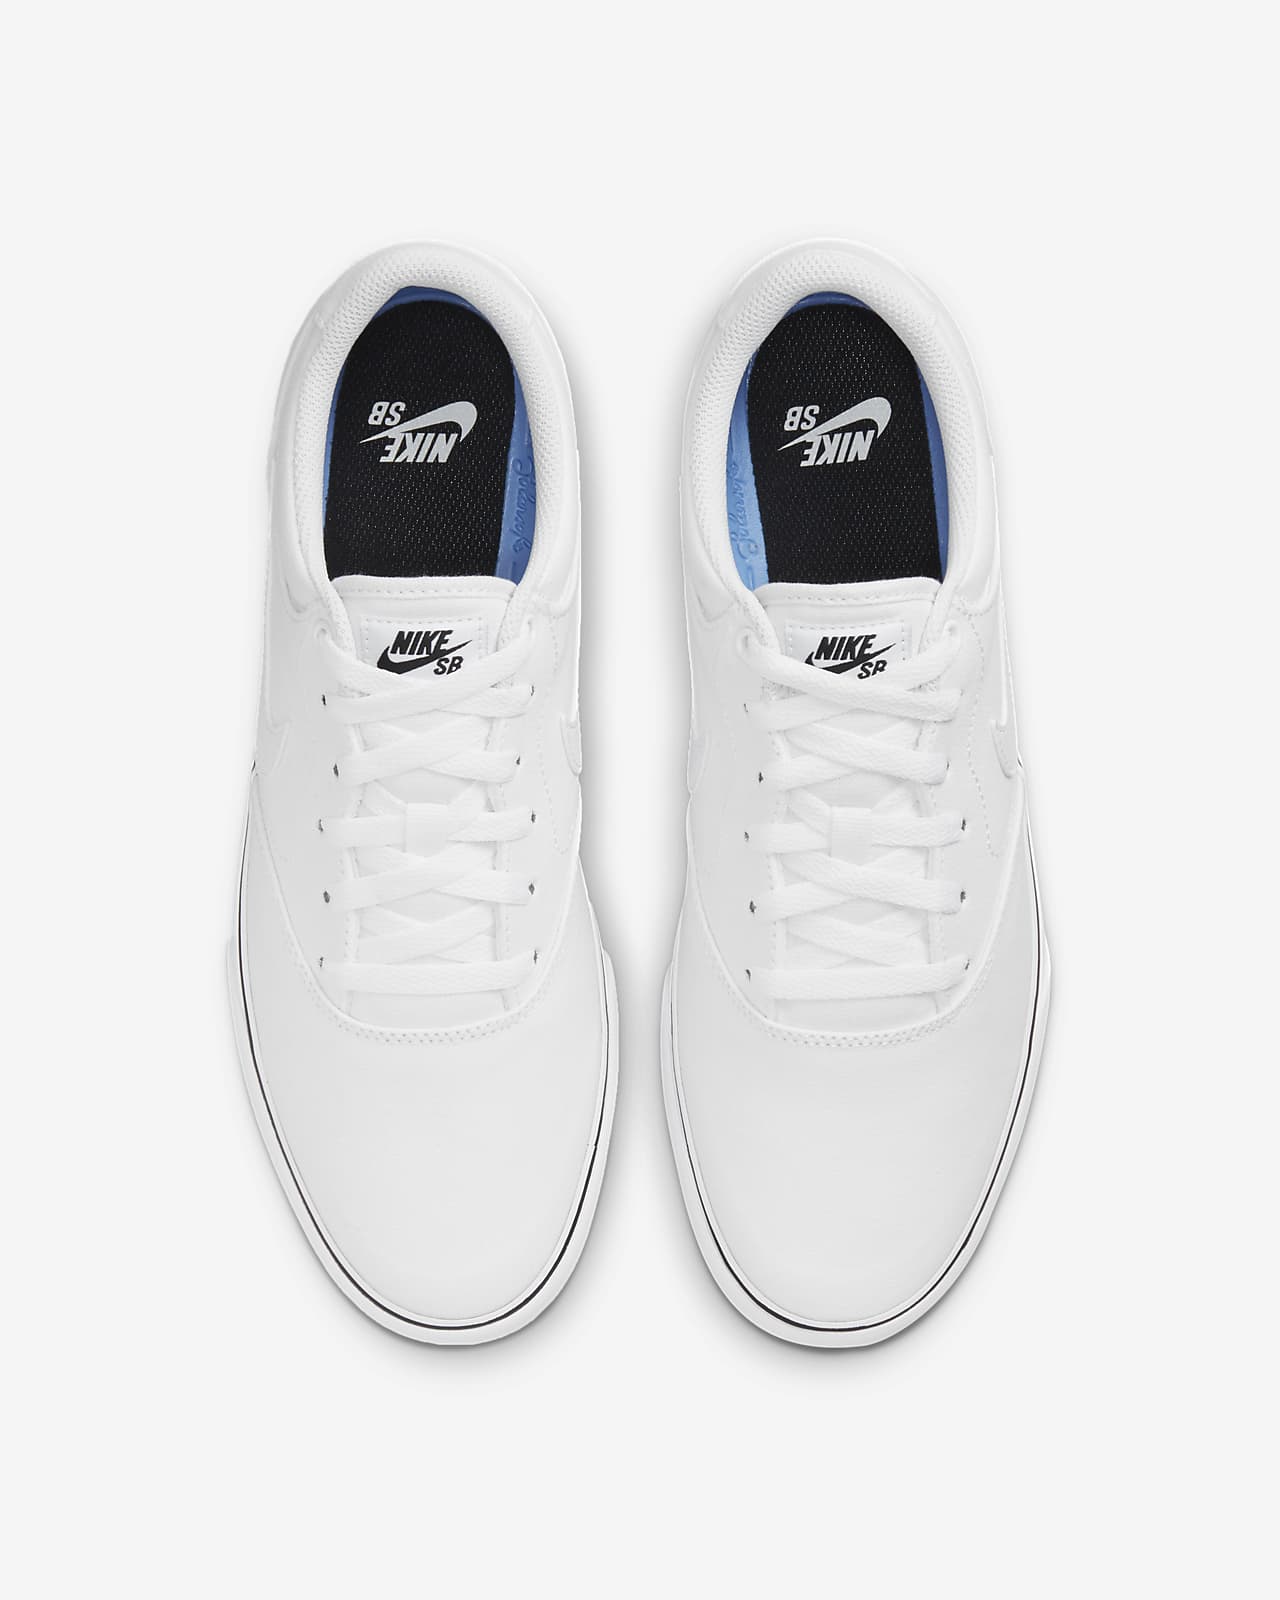 Nike SB Chron Canvas Skate Shoes.